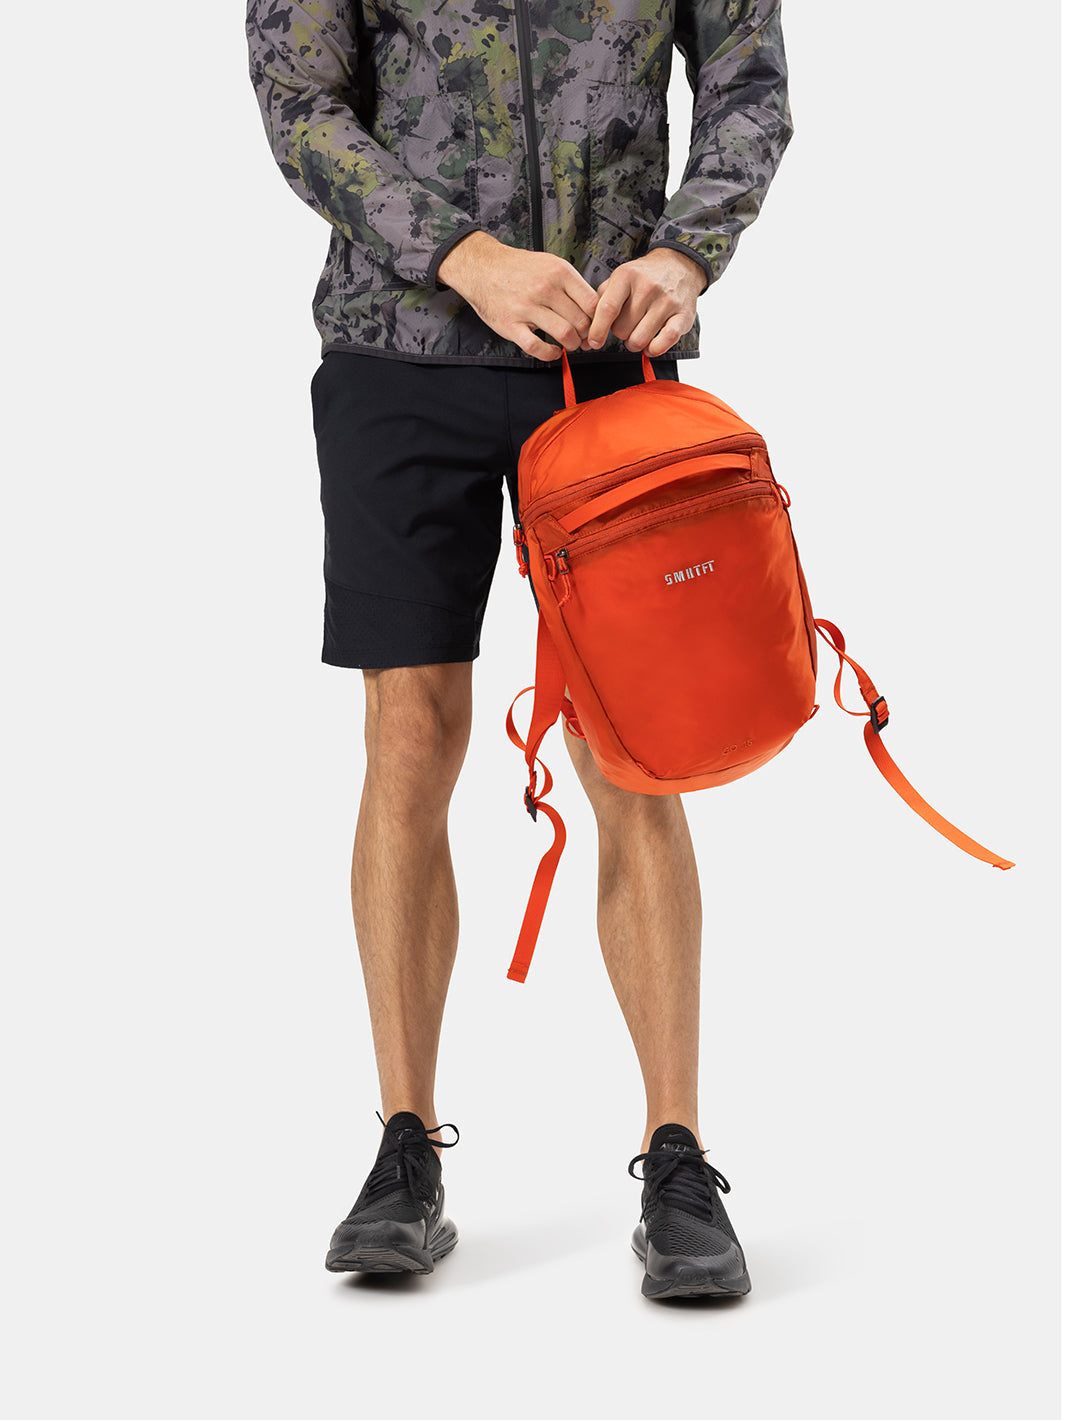 Orange SMRTFT Backpack for Men | Backpacks For Men | SMRTPAC GO